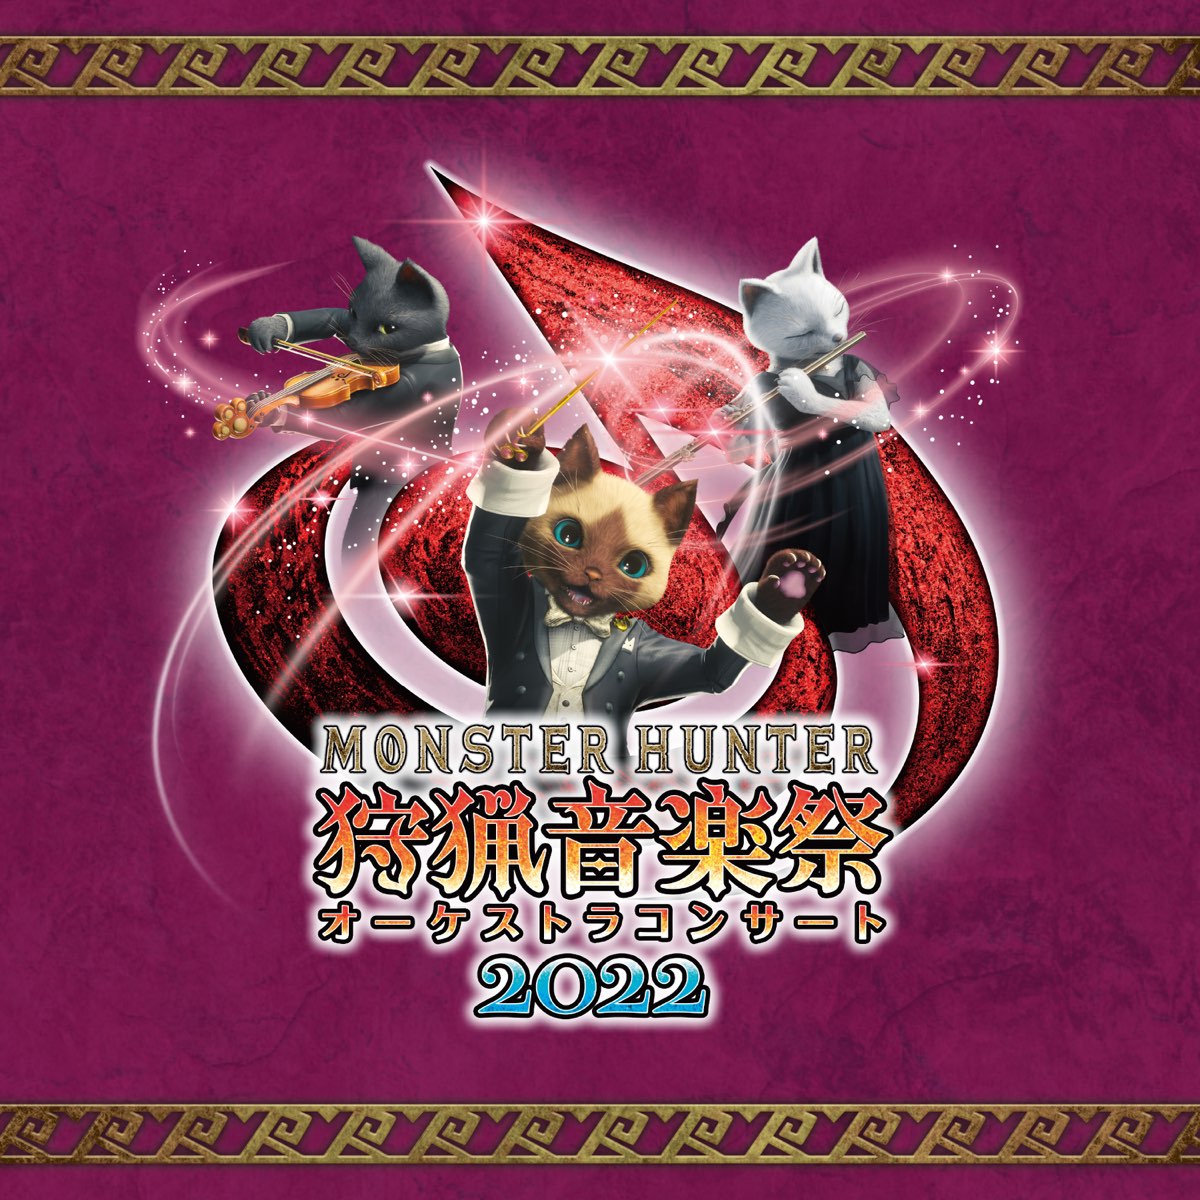 ‎Monster Hunter Orchestra Concert 2022 (Live) by Hirofumi Kurita